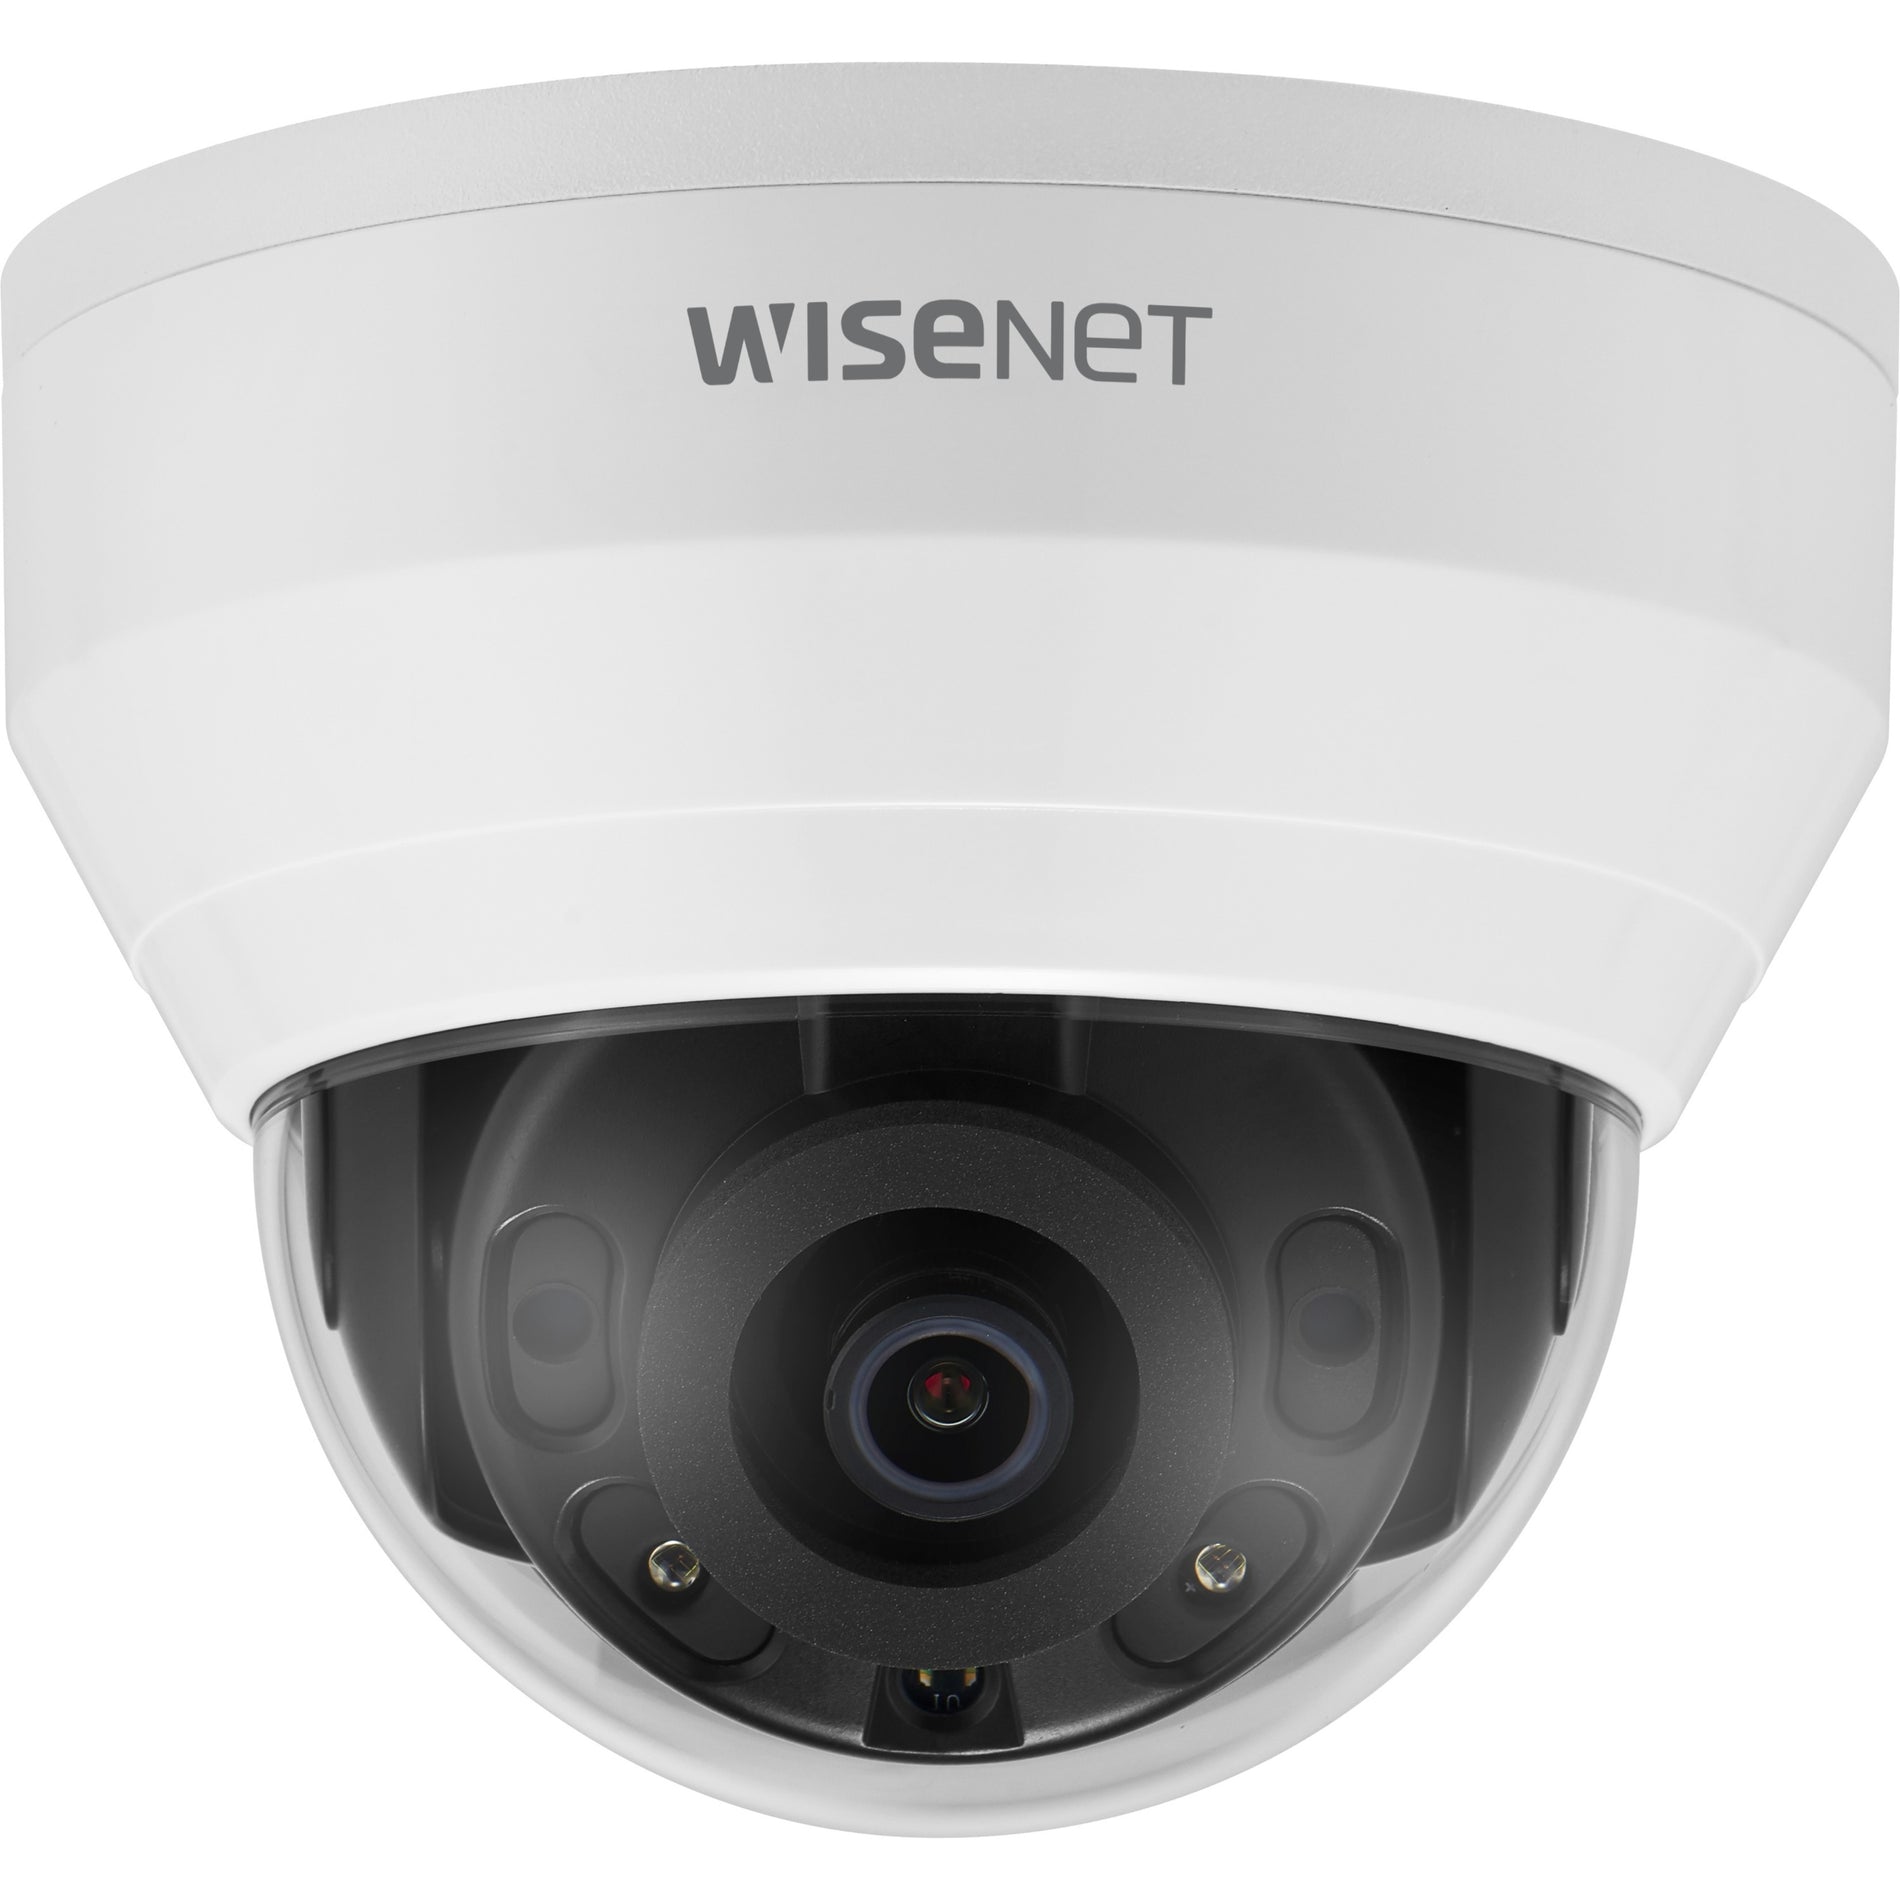 Wisenet QND-8020R 5 MP Network IR Dome Camera, Color, Dome